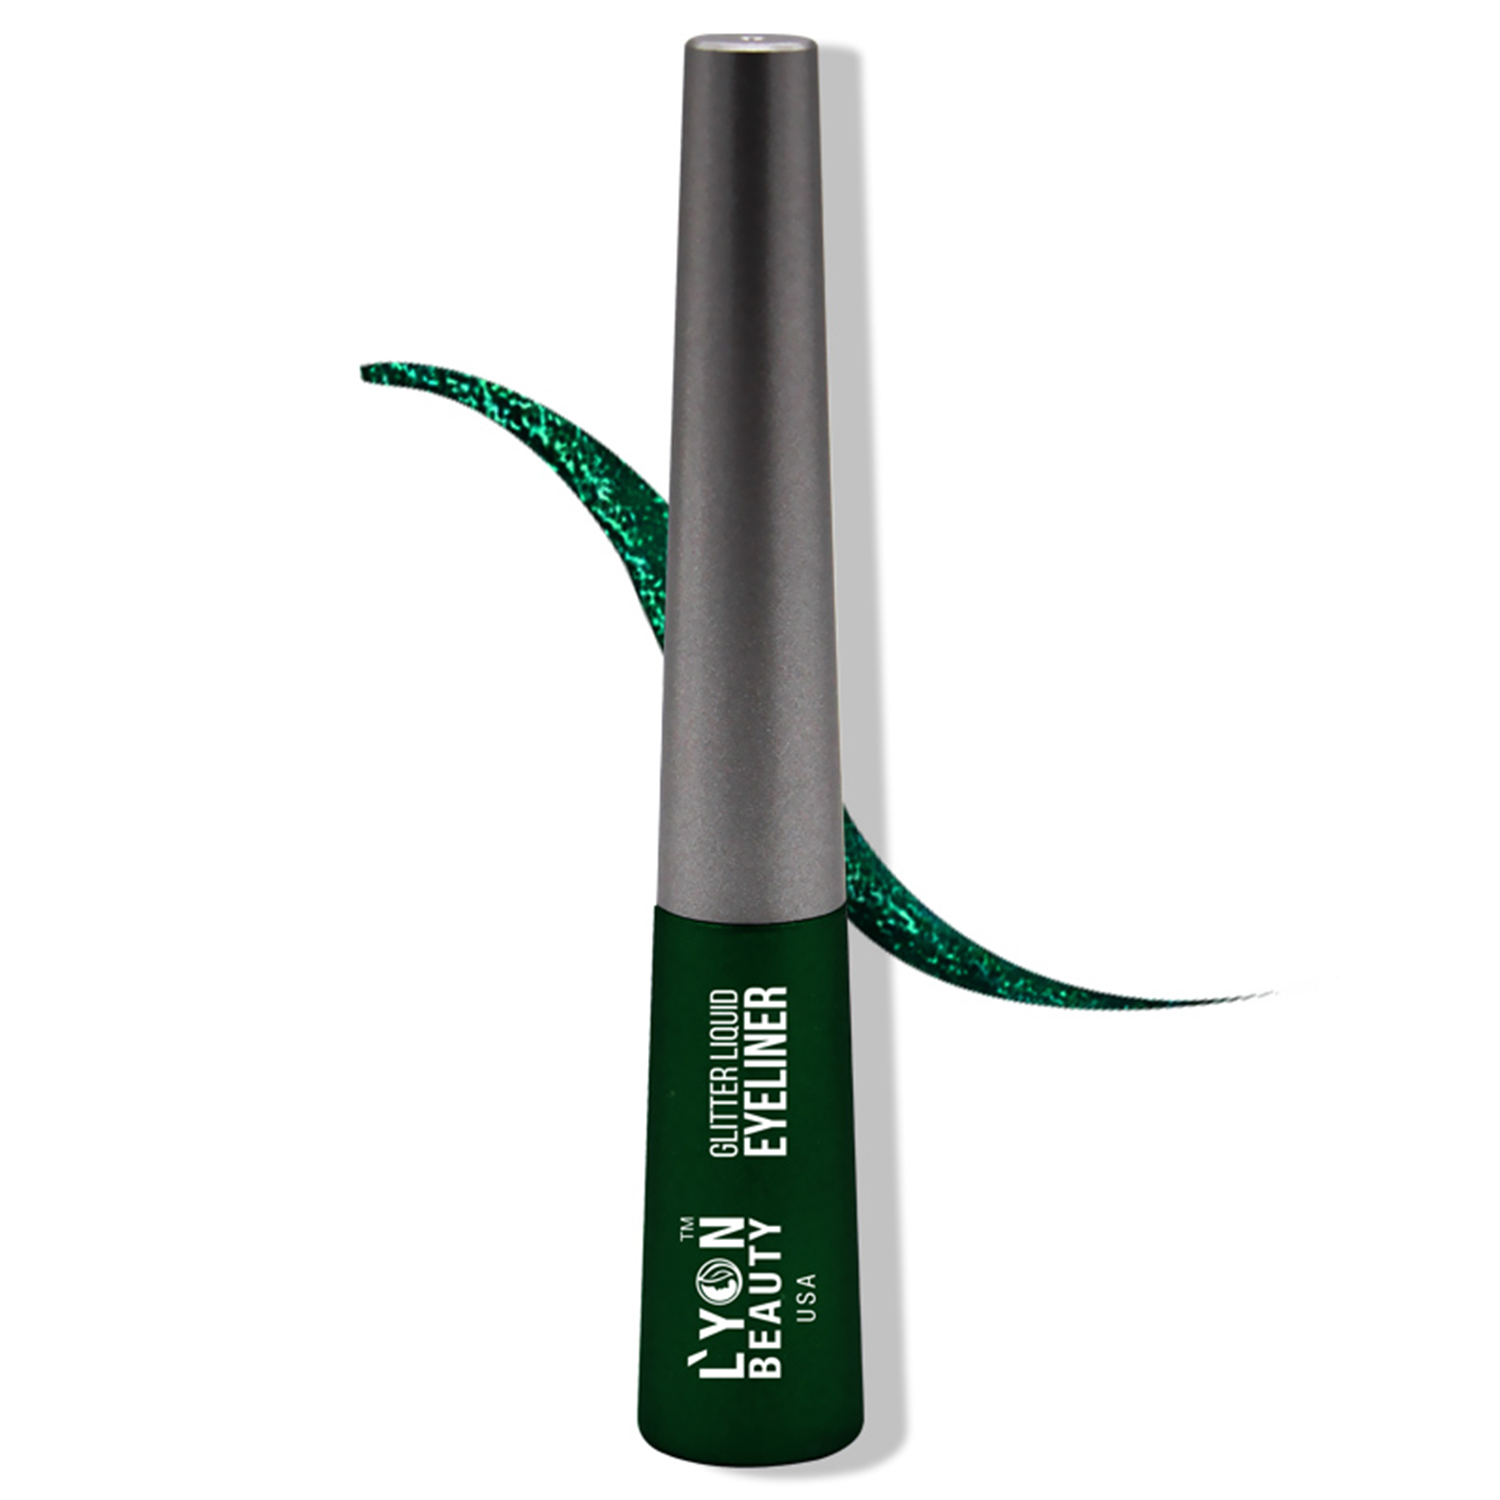 Lyon Beauty USA Glitter Liquid Eyeliner, 5ml-01 Peacock Green